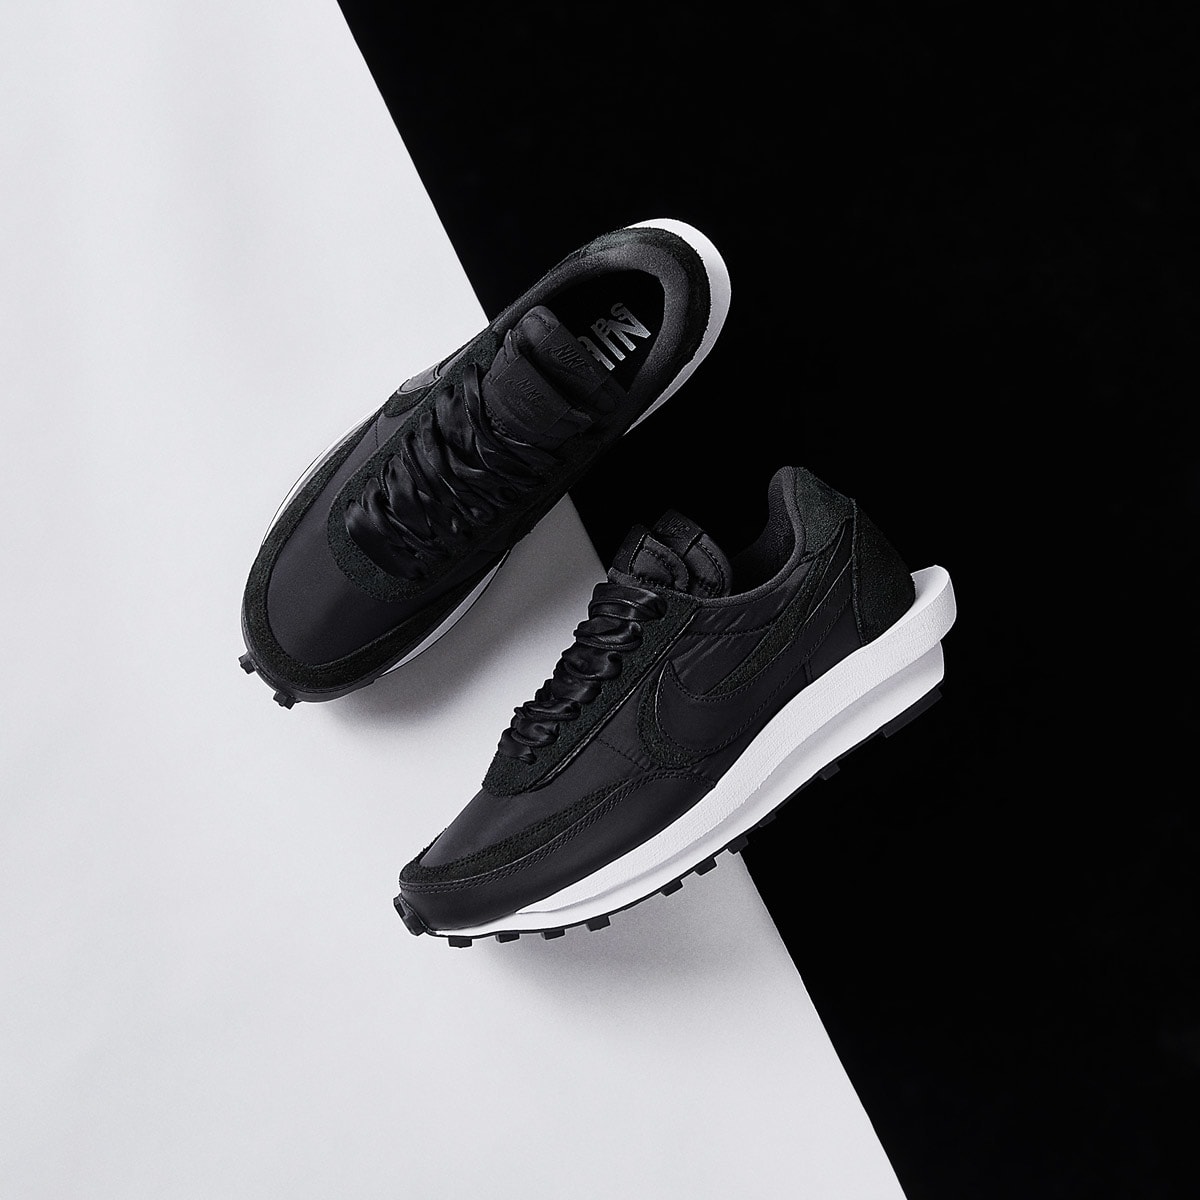 Nike x Sacai LDWaffle (Black) | END. Launches